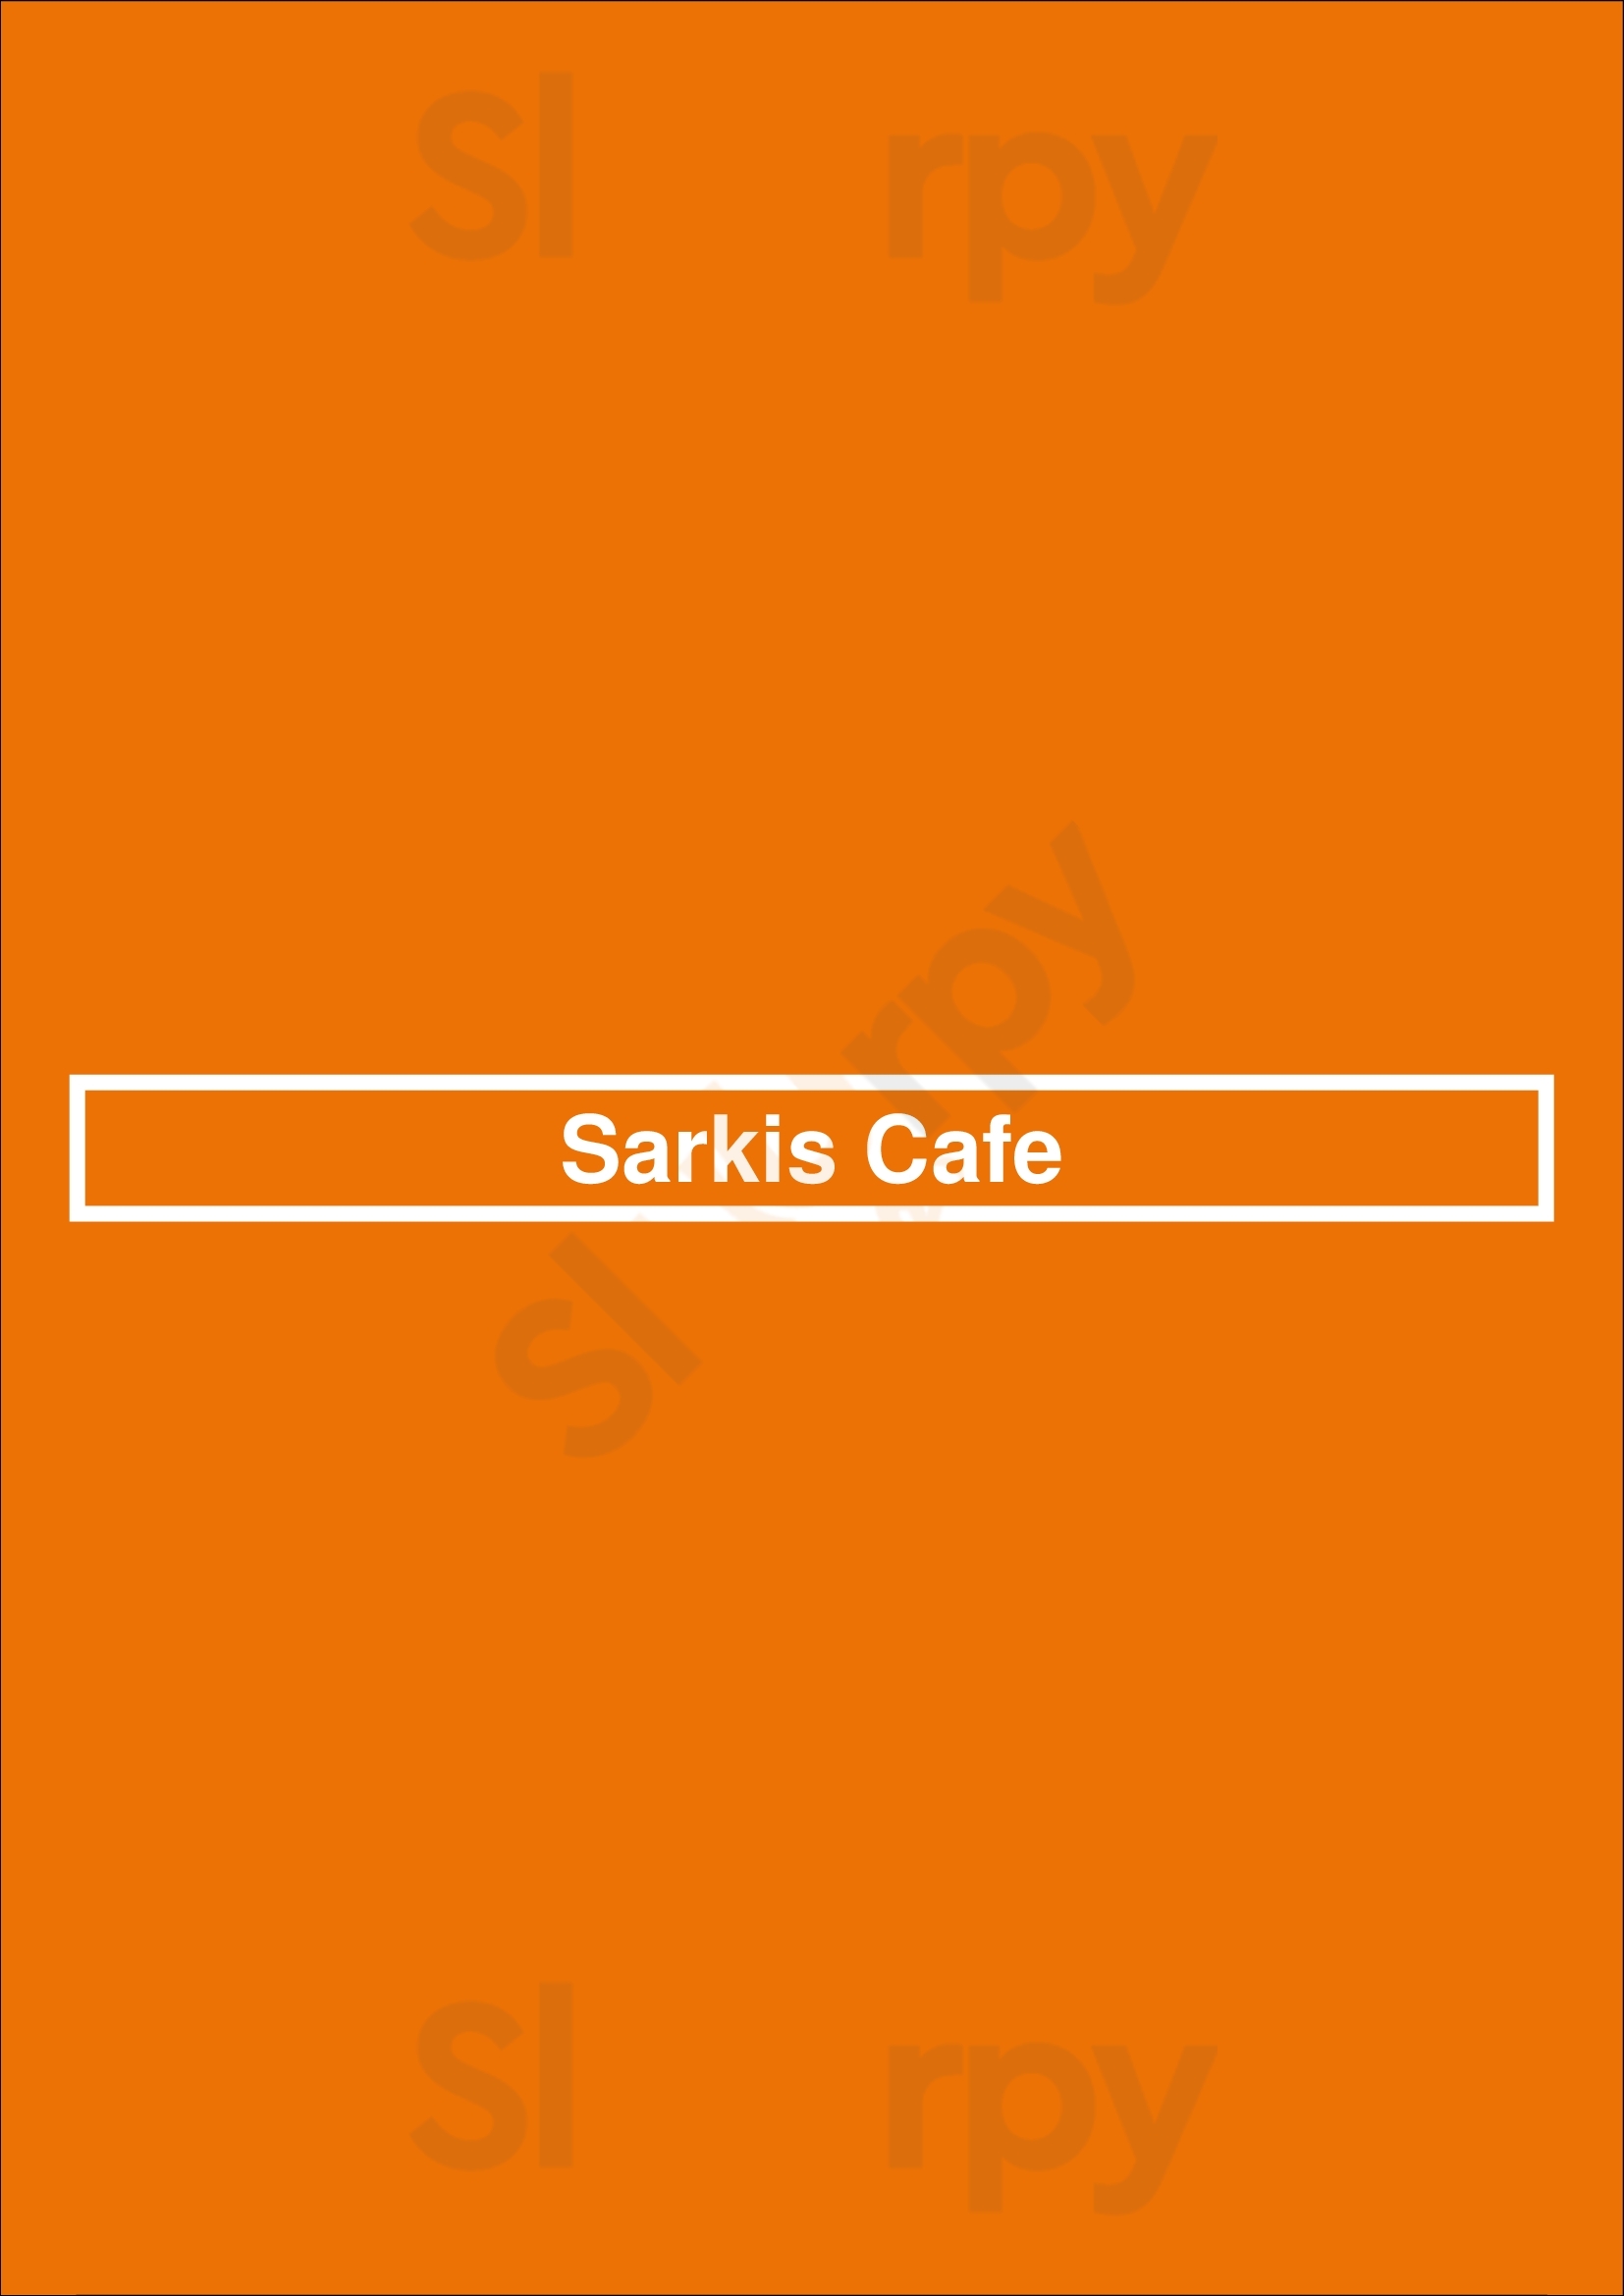 Sarkis Cafe Chicago Menu - 1